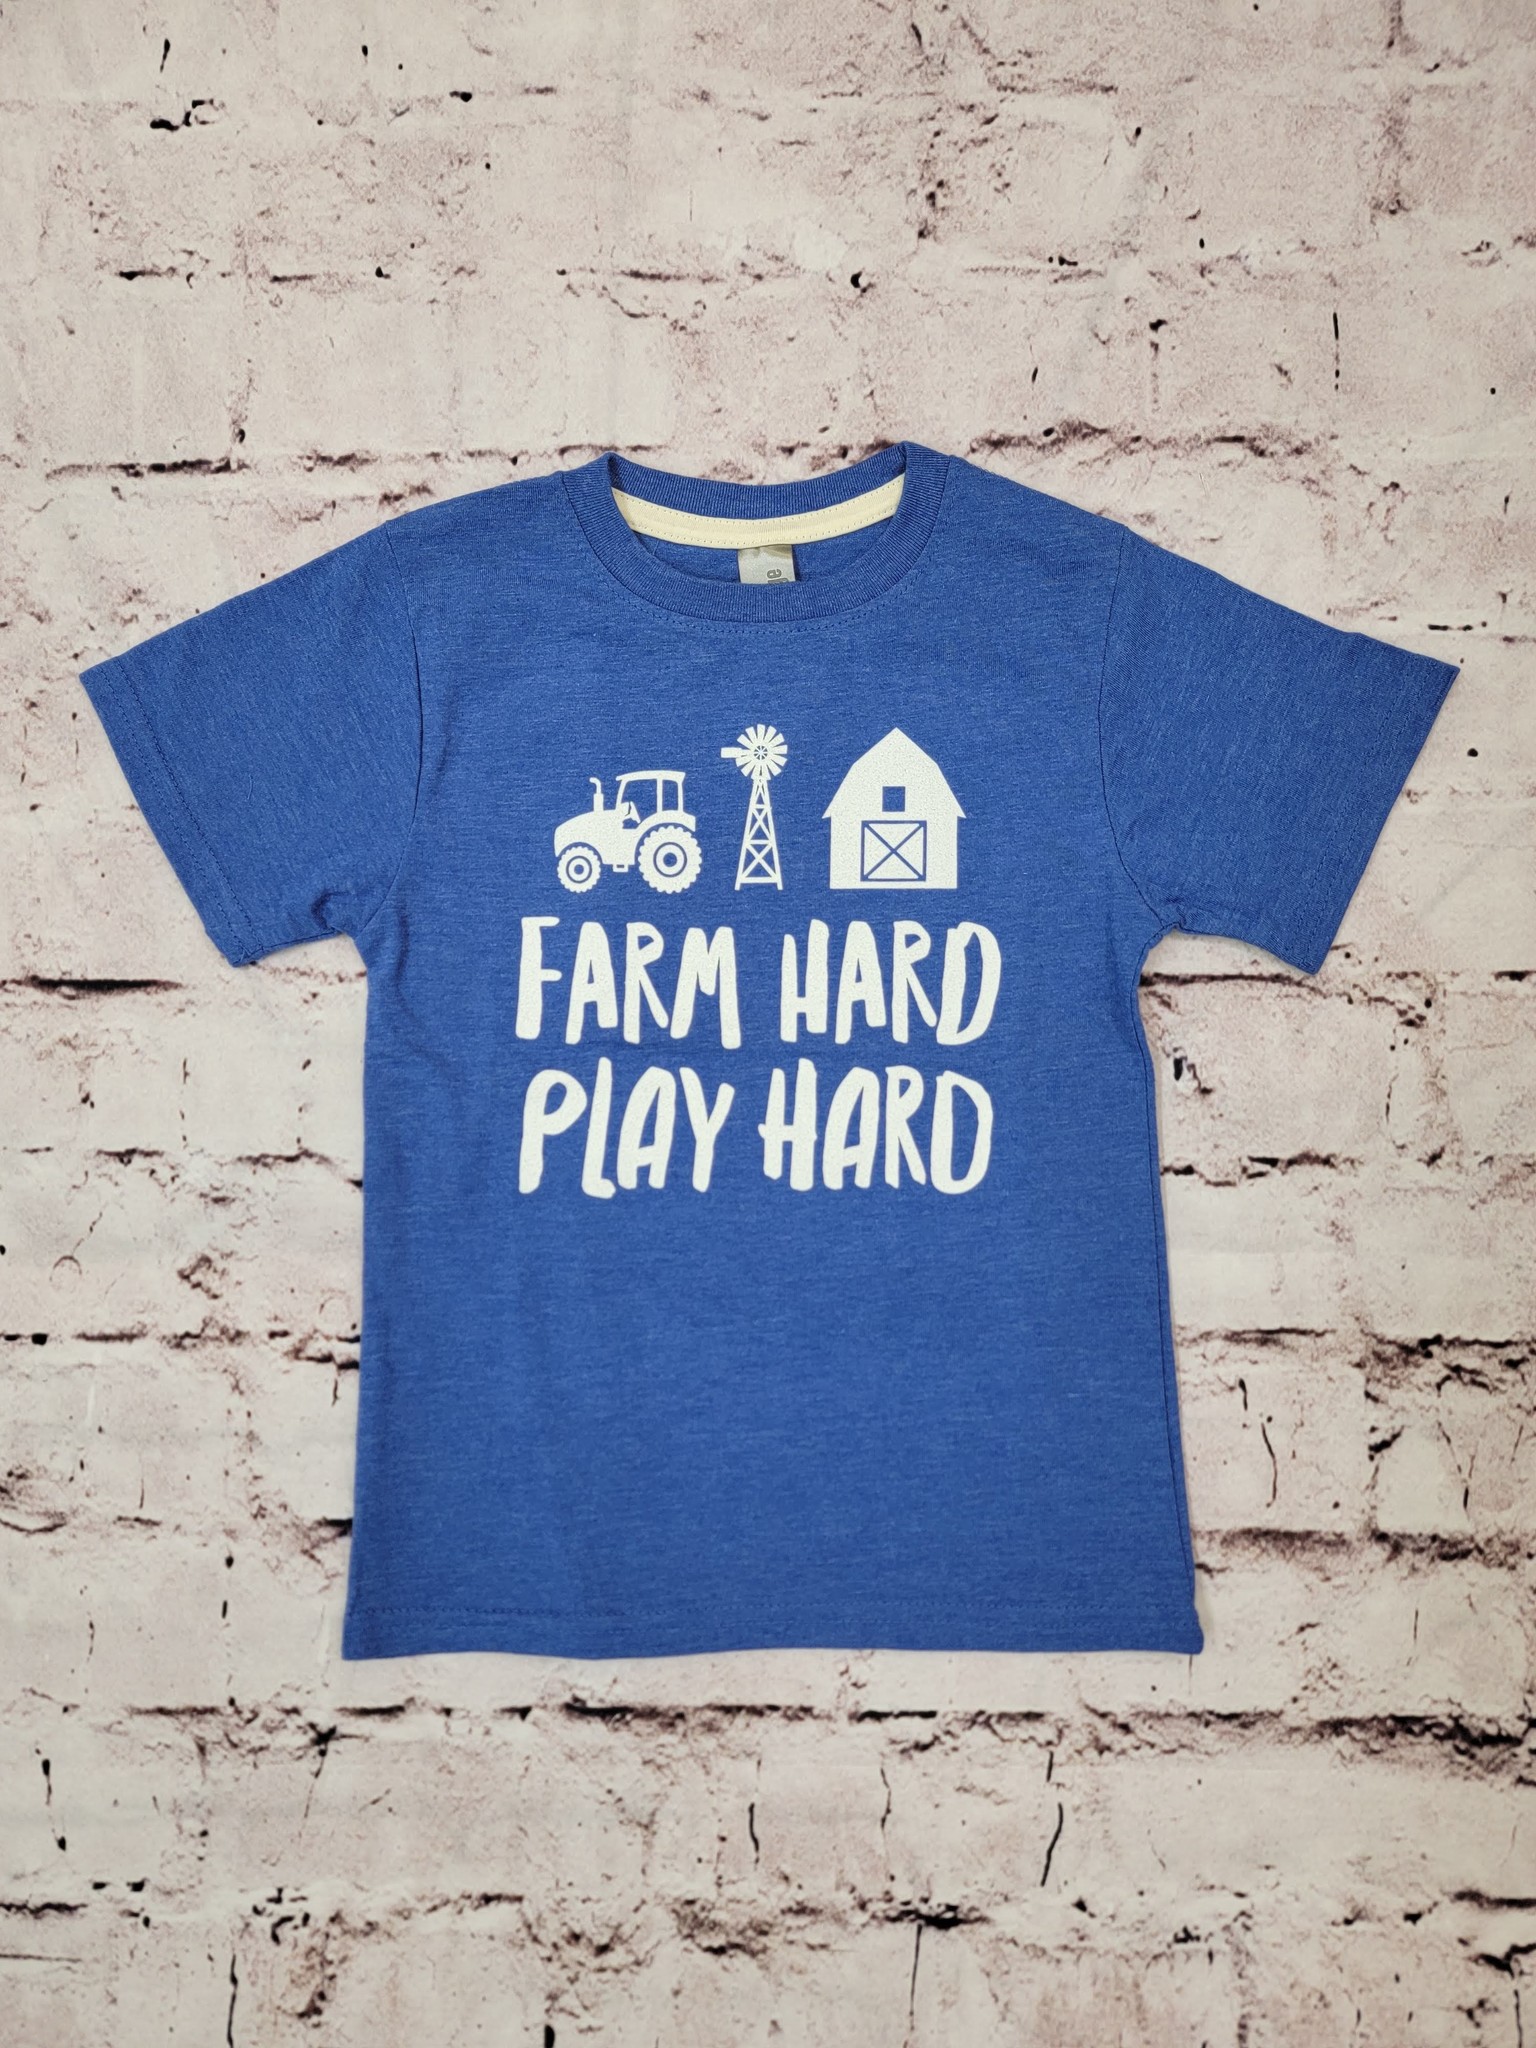 Country Casuals Farm Hard Play Hard Kids Tee